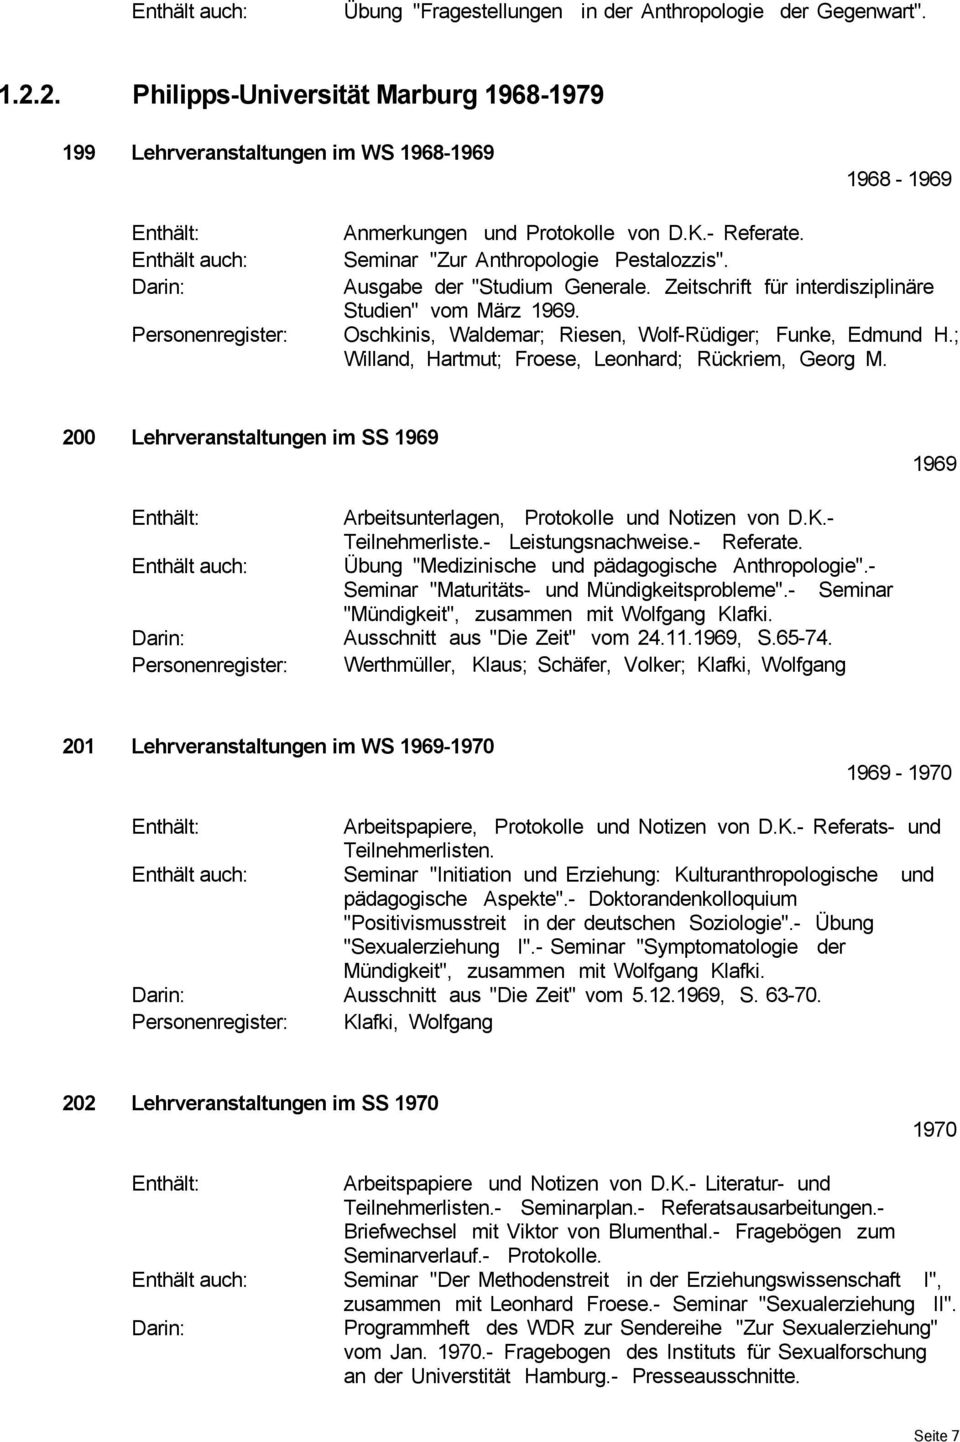 Oschkinis, Waldemar; Riesen, Wolf-Rüdiger; Funke, Edmund H.; Willand, Hartmut; Froese, Leonhard; Rückriem, Georg M.